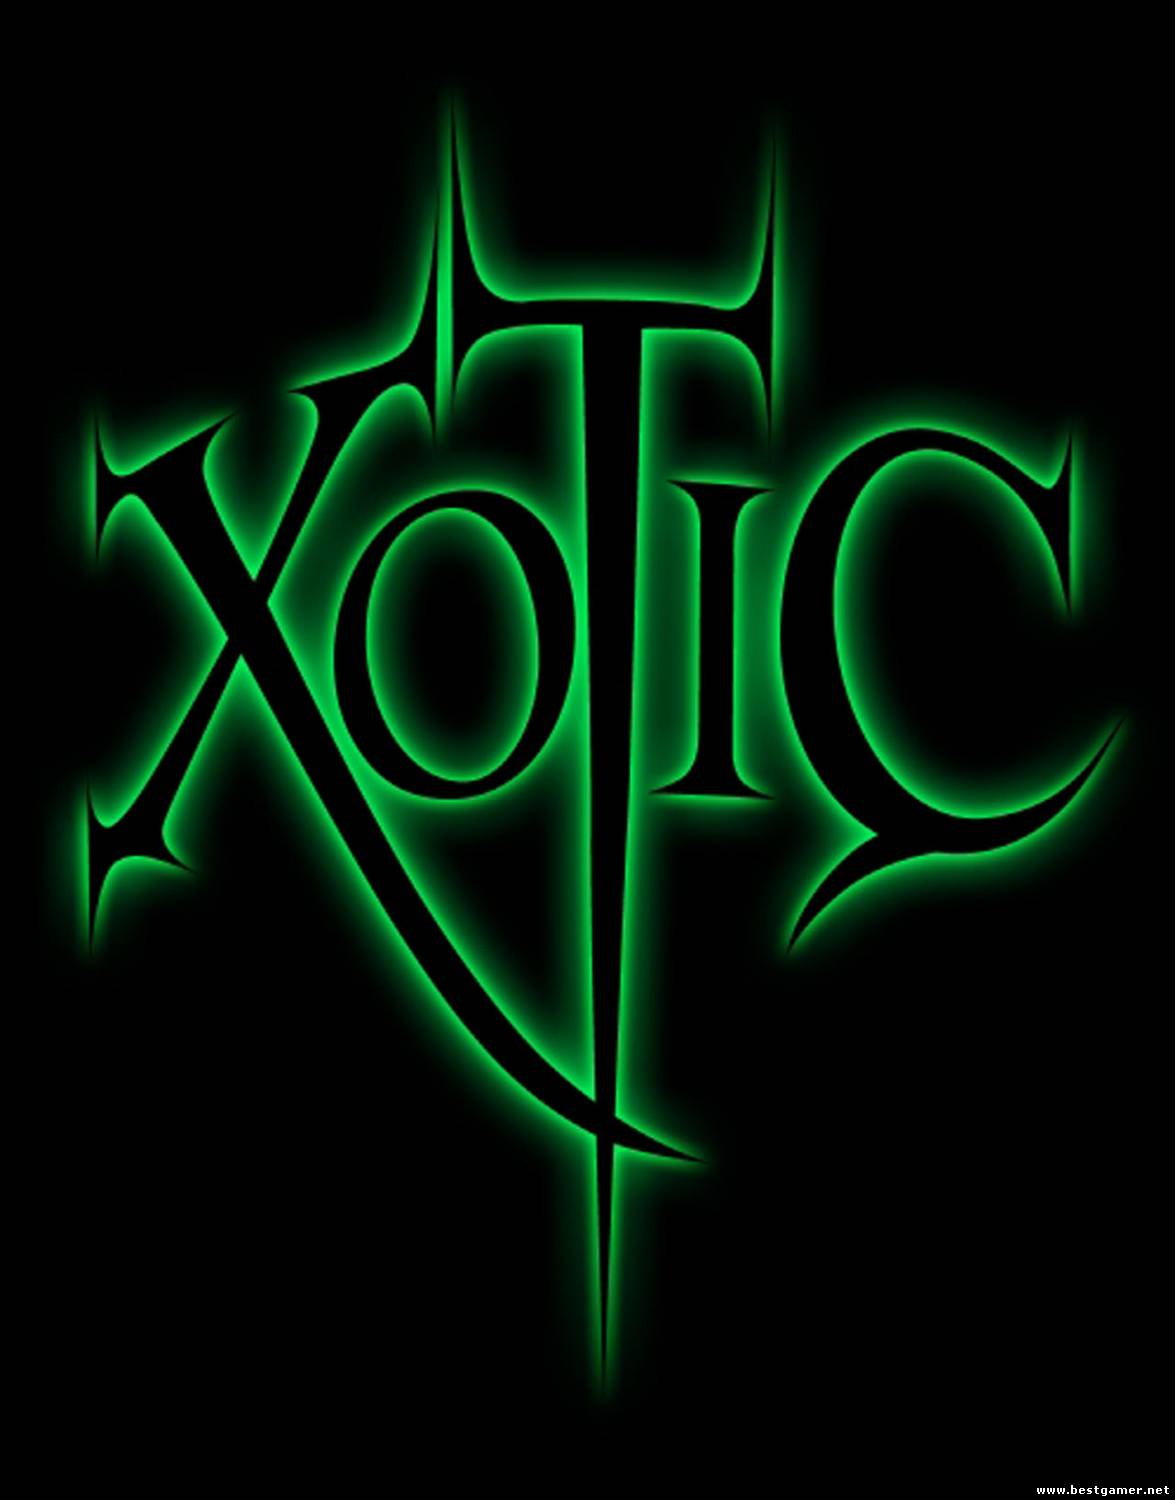 Xotic [RePack] [ENG] (2011)